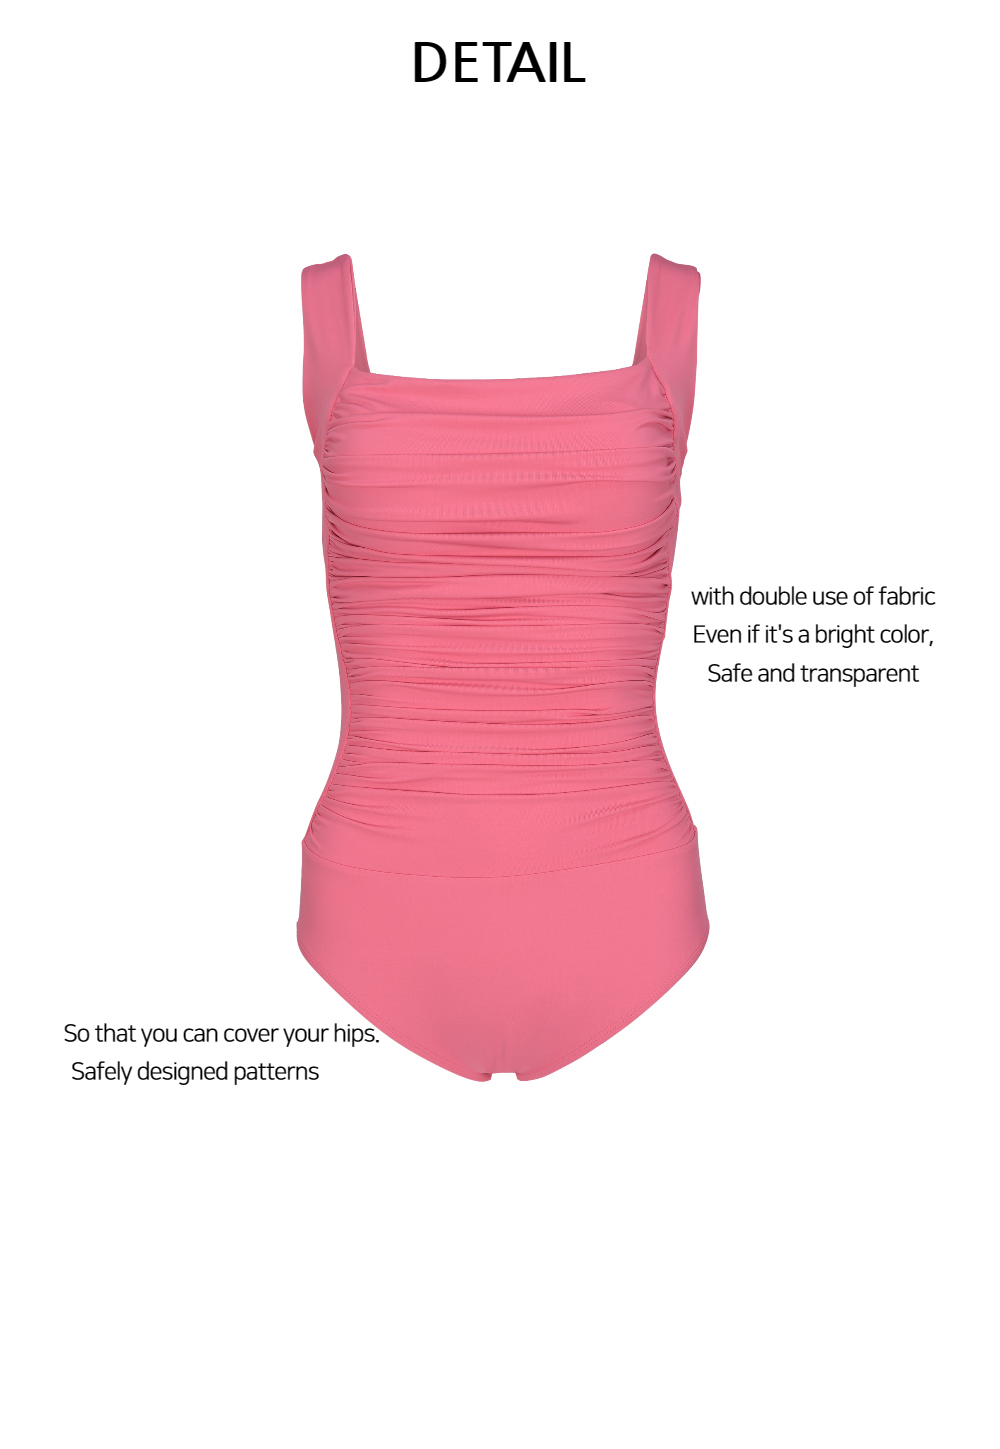 dress pink color image-S9L32